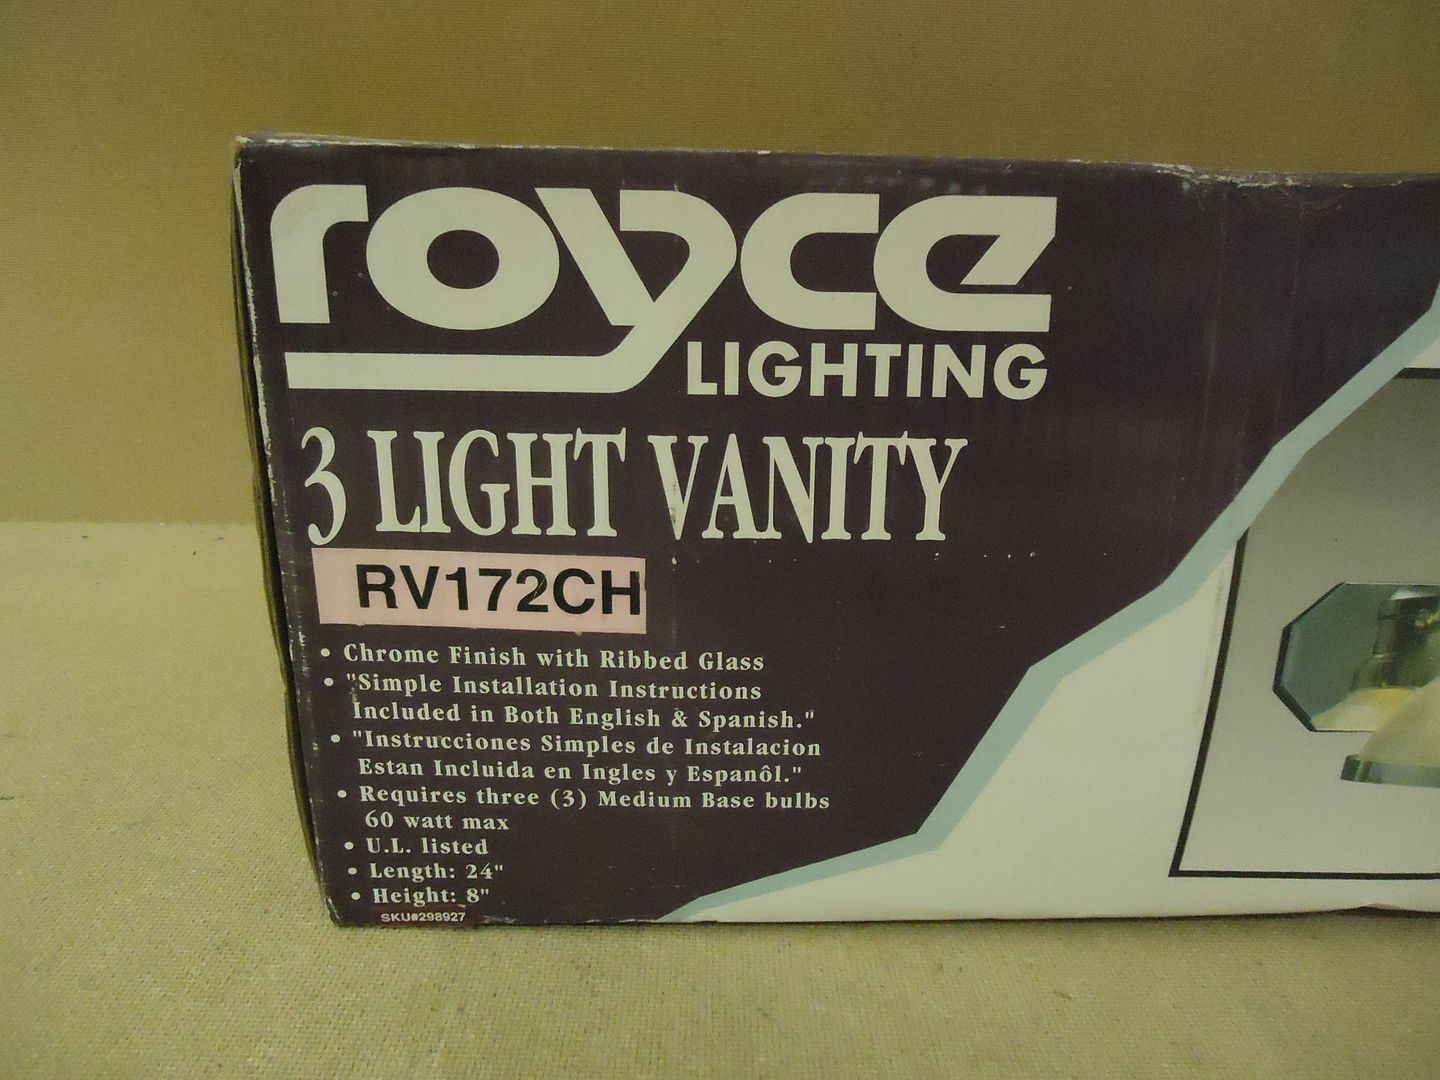 Royce Lighting 3 Light Vanity 24in L x 8in H Chrome Clear RV172CH Metal Glass